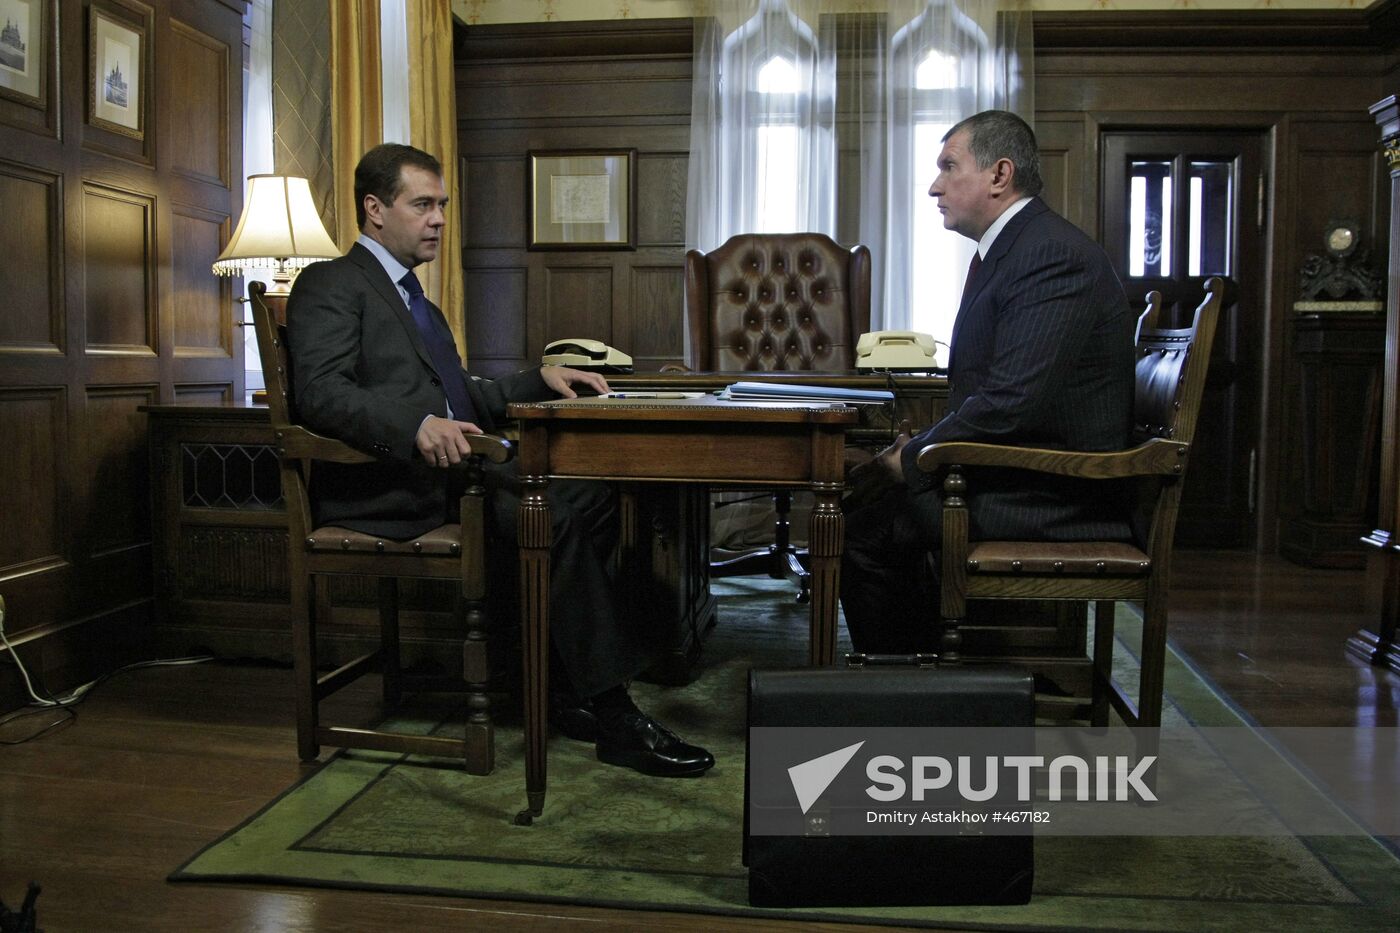 Dmitry Medvedev meets with Deputy PM Igor Sechin